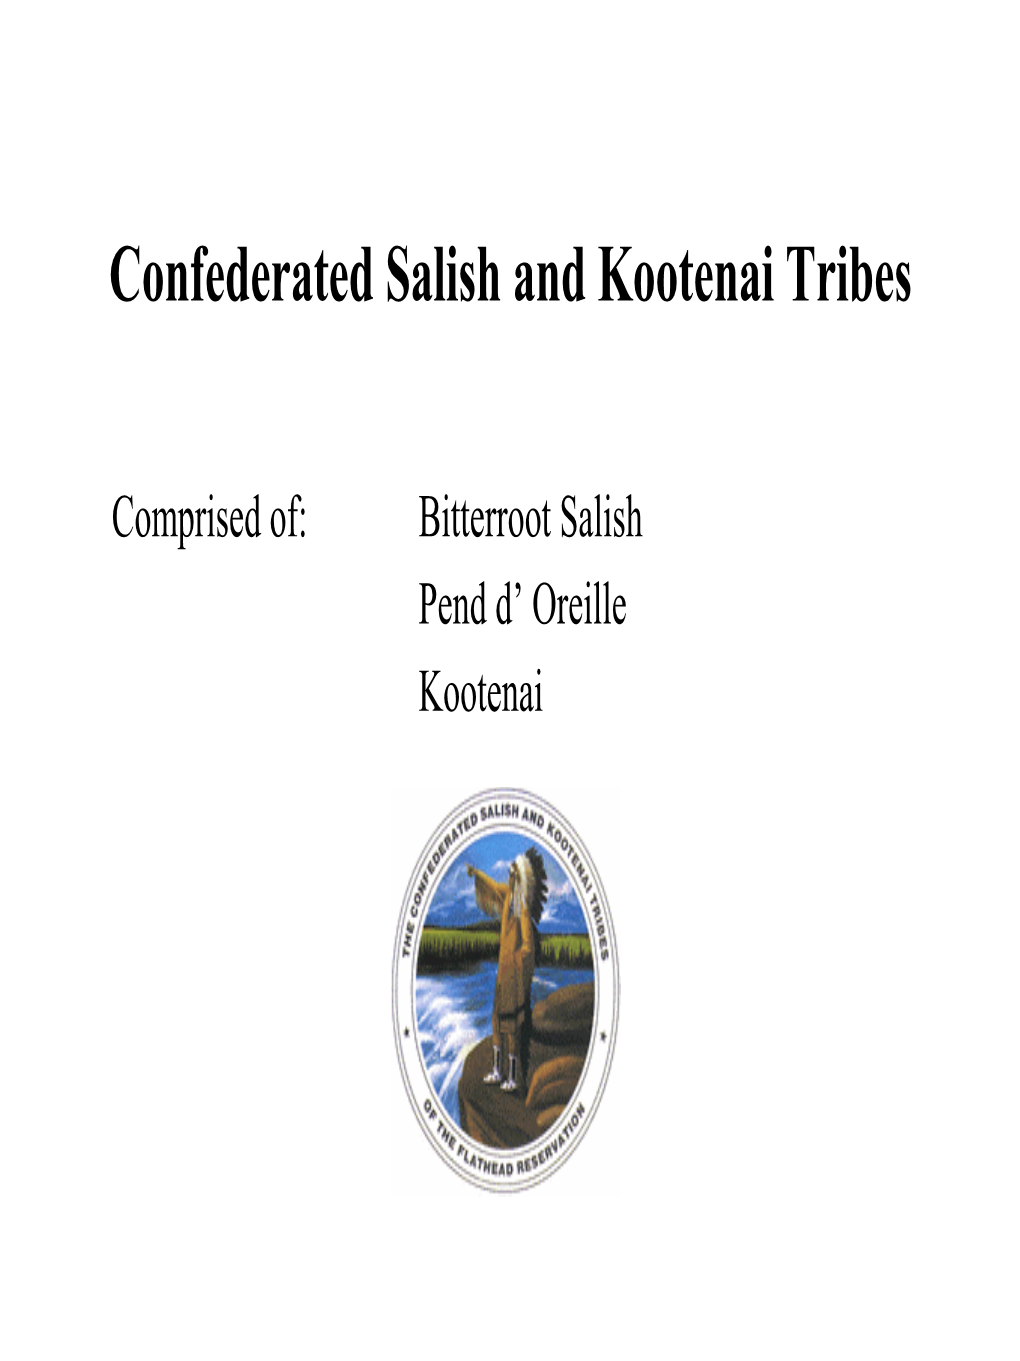 Salish and Kootenai Tribes